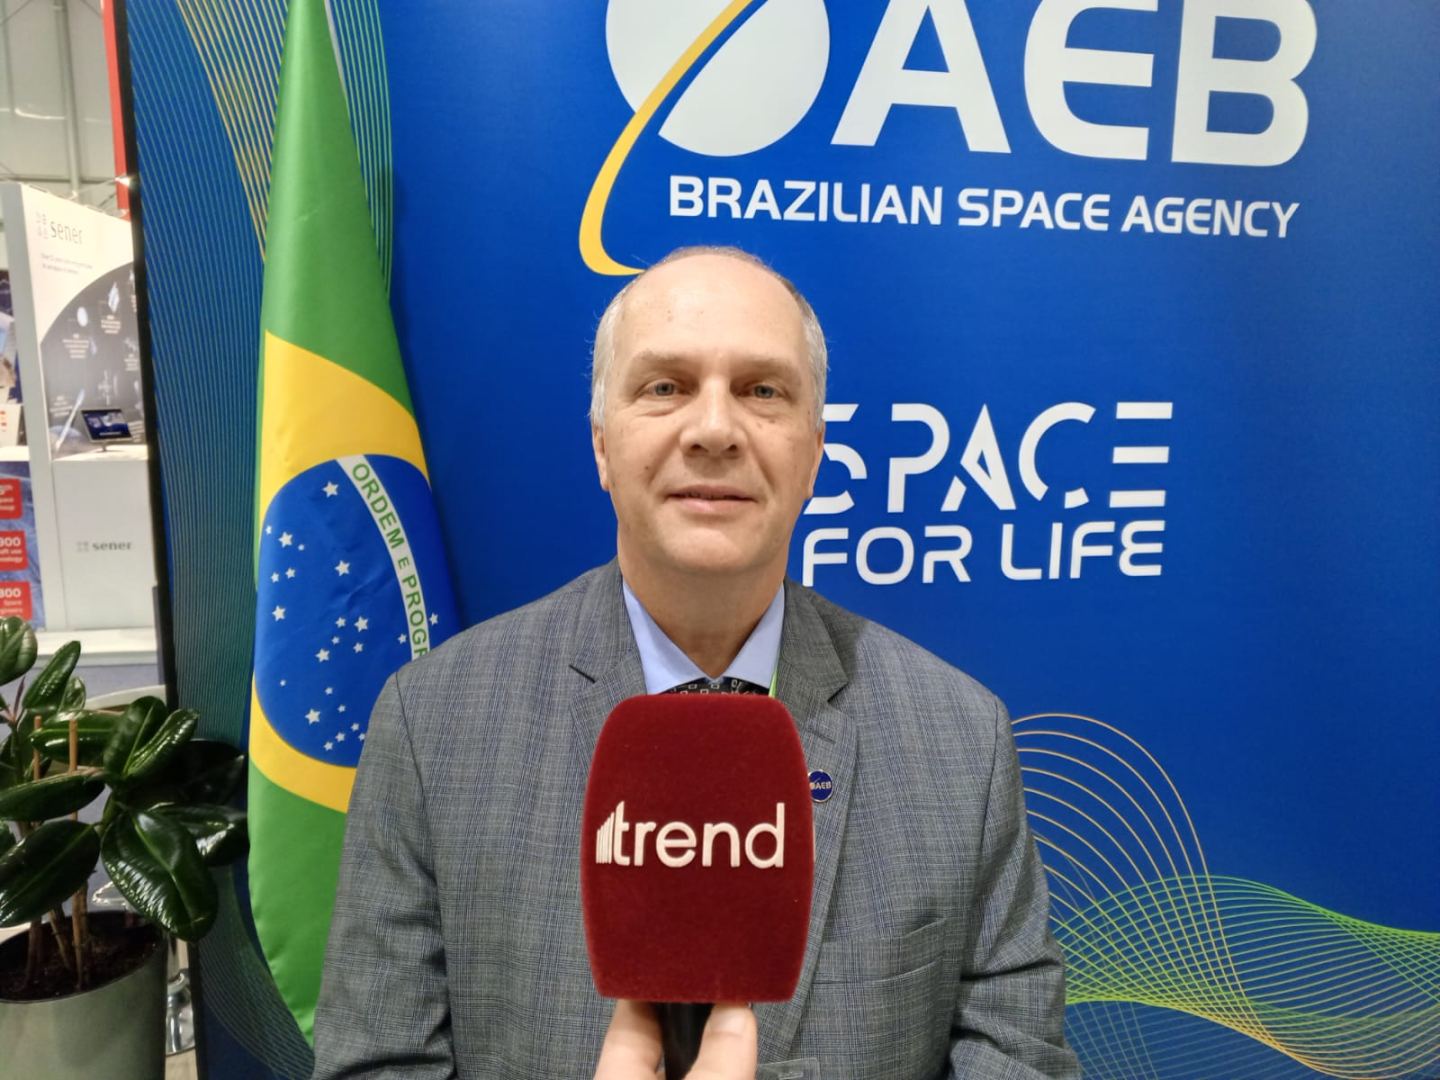 Azerbaijan has enormous space industry potential - Brazilian Space Agency